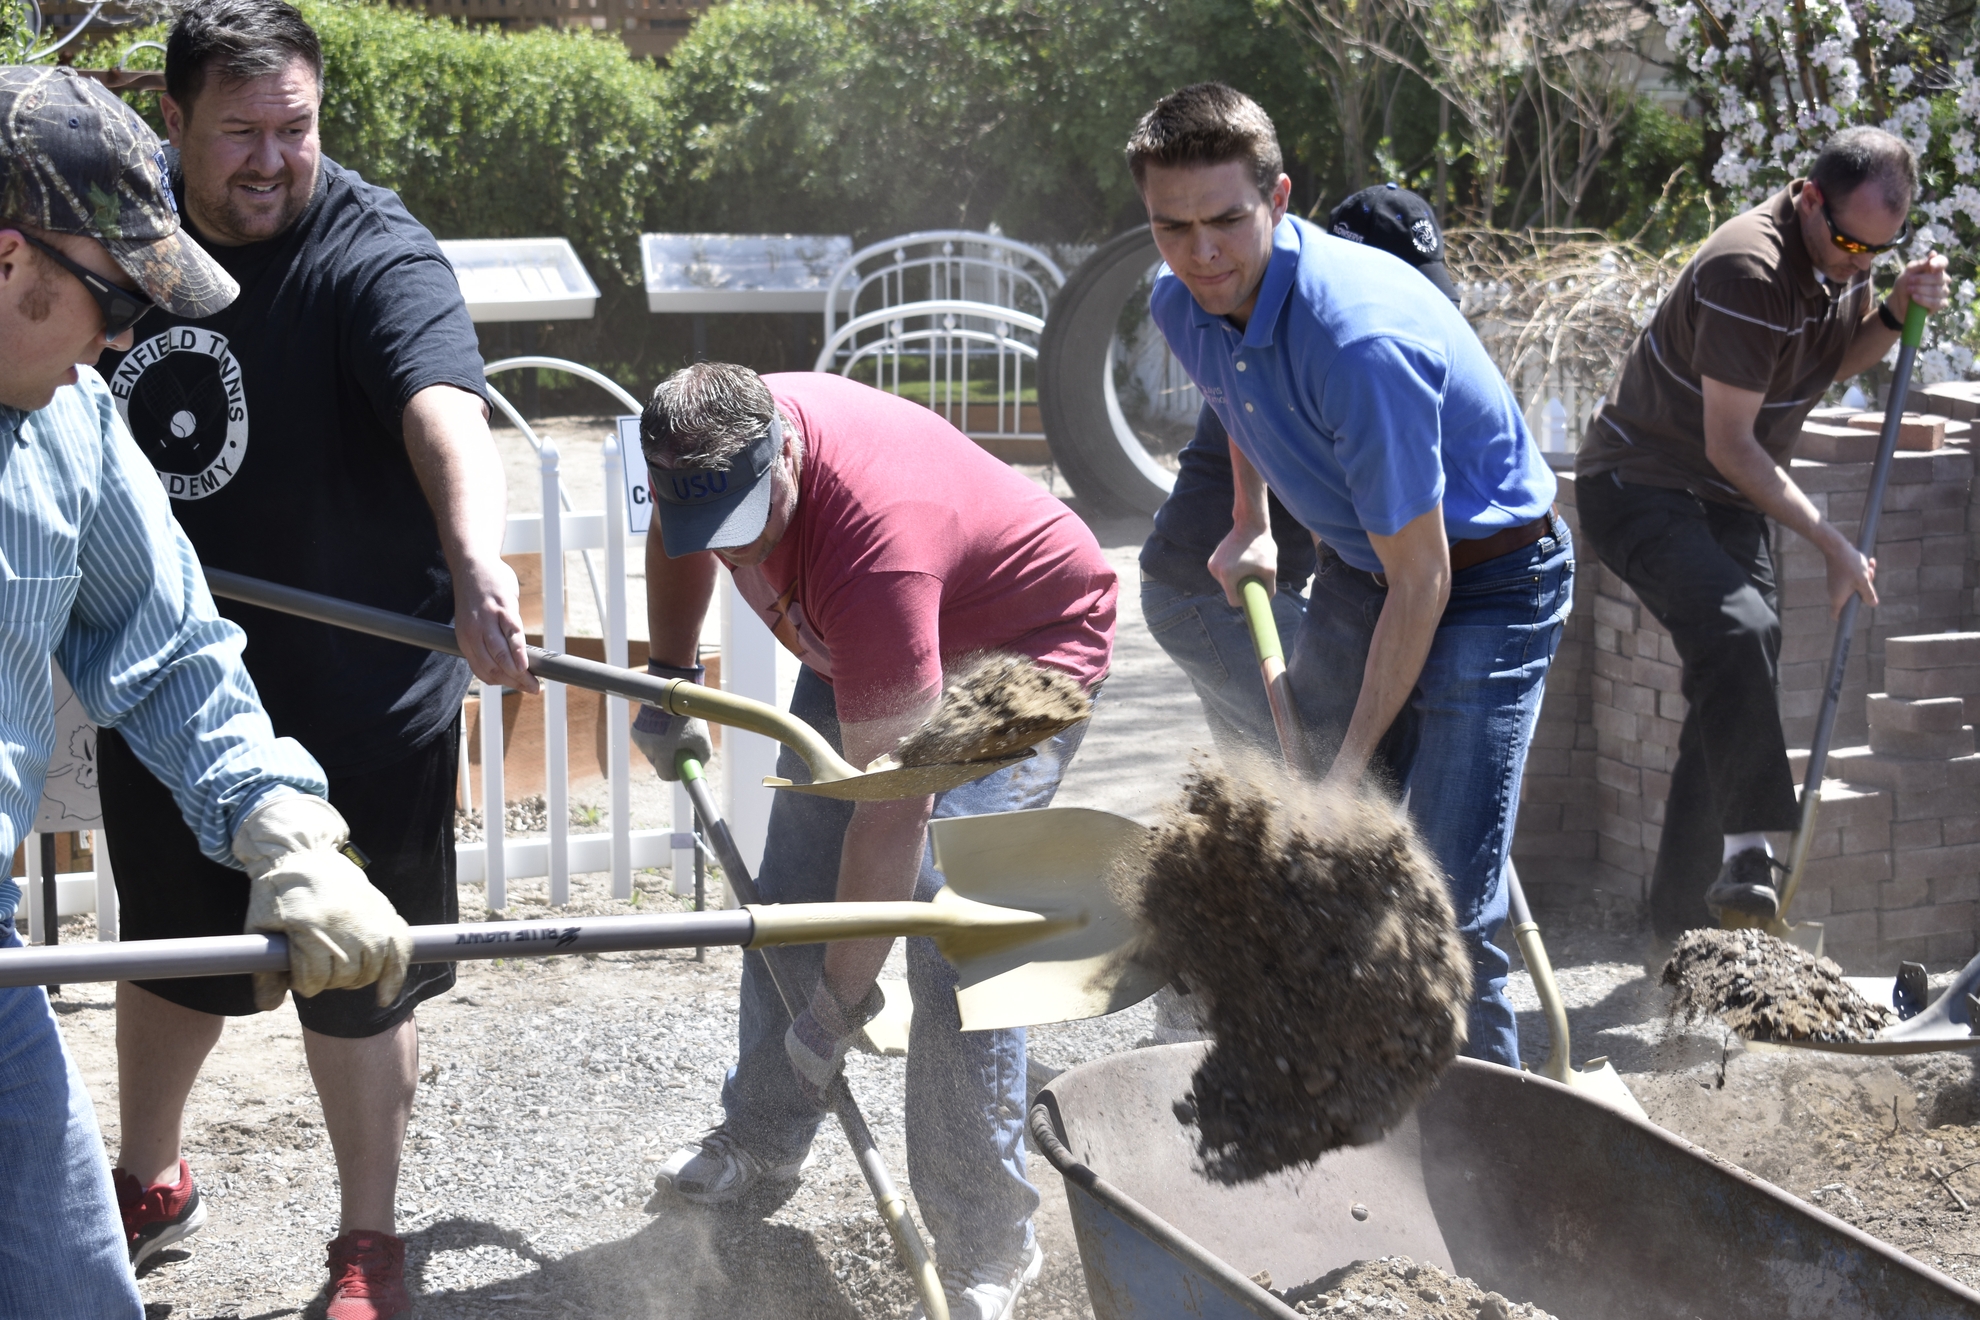 Group of men shoveling dirt into wheelbarrow. 